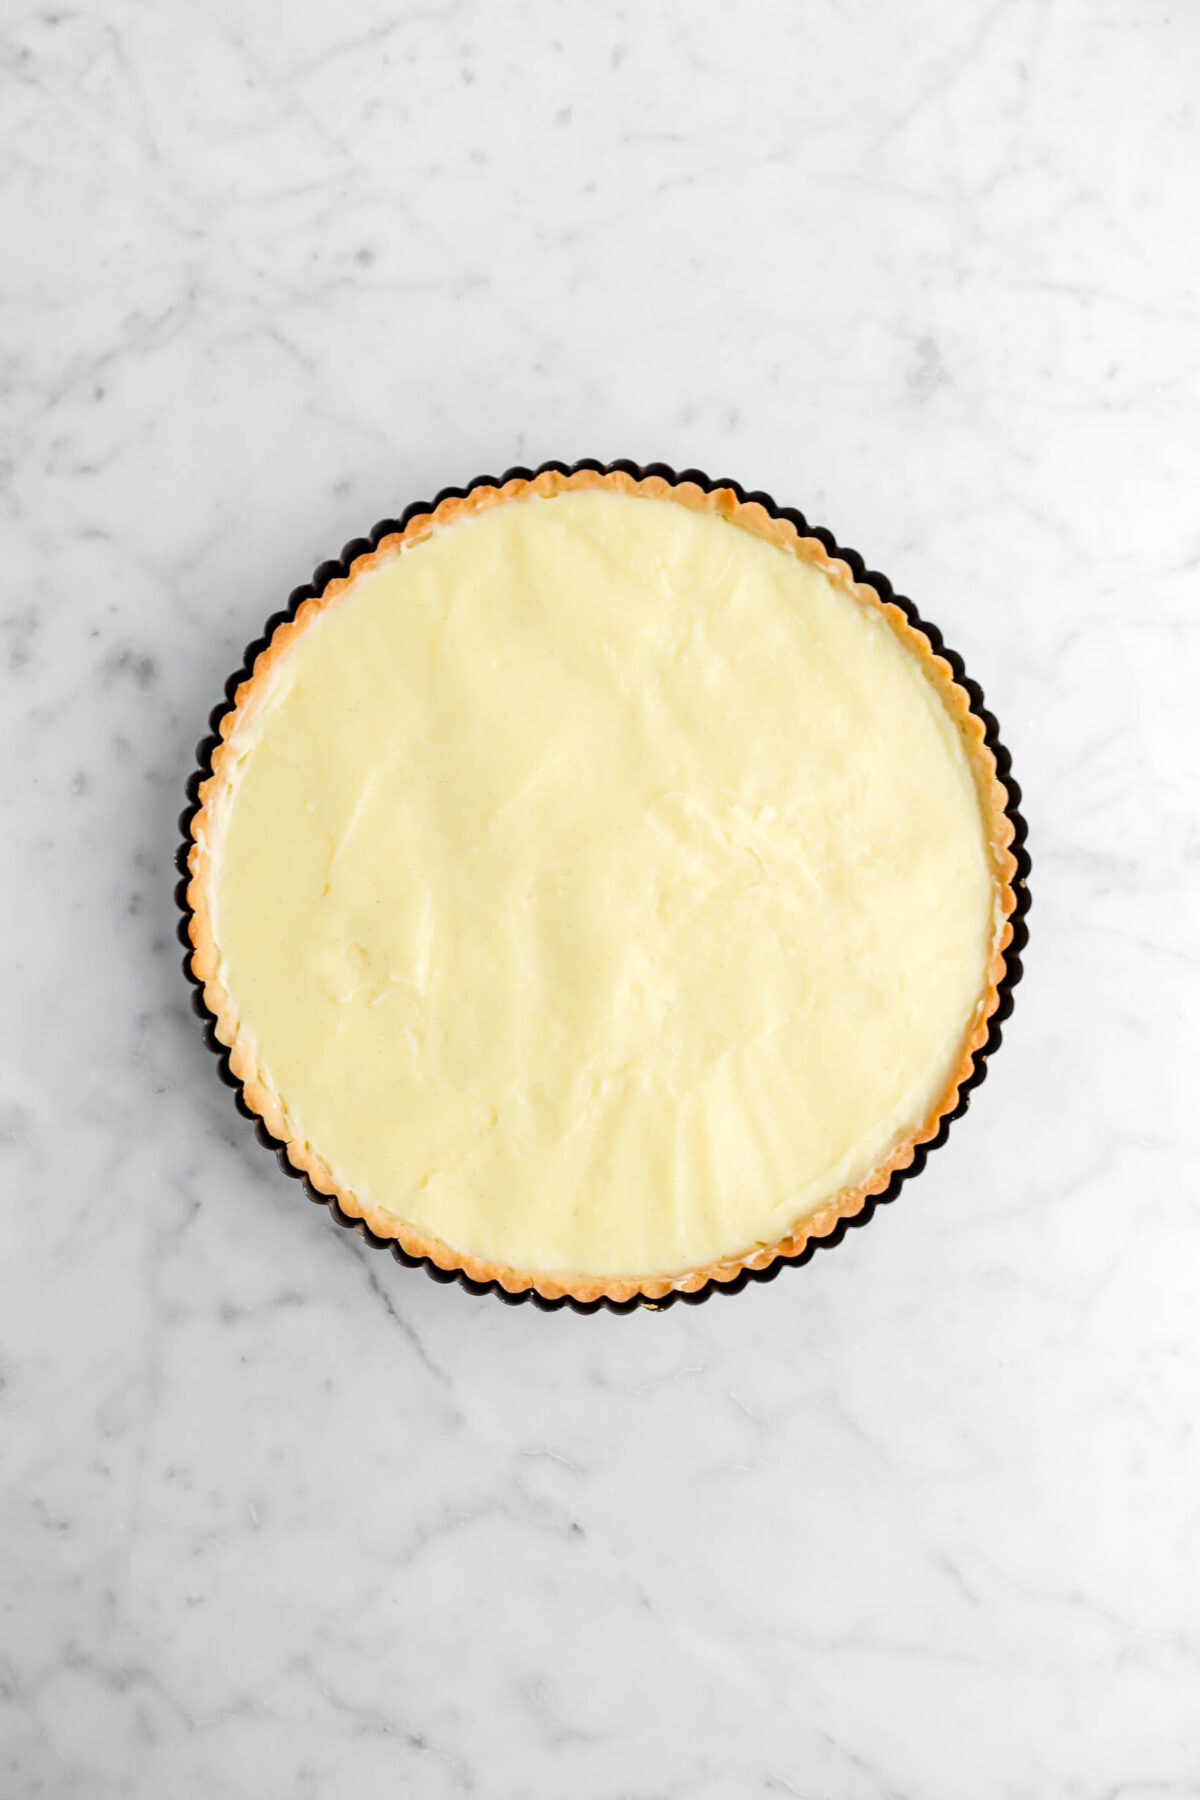 vanilla custard in baked tart shell.